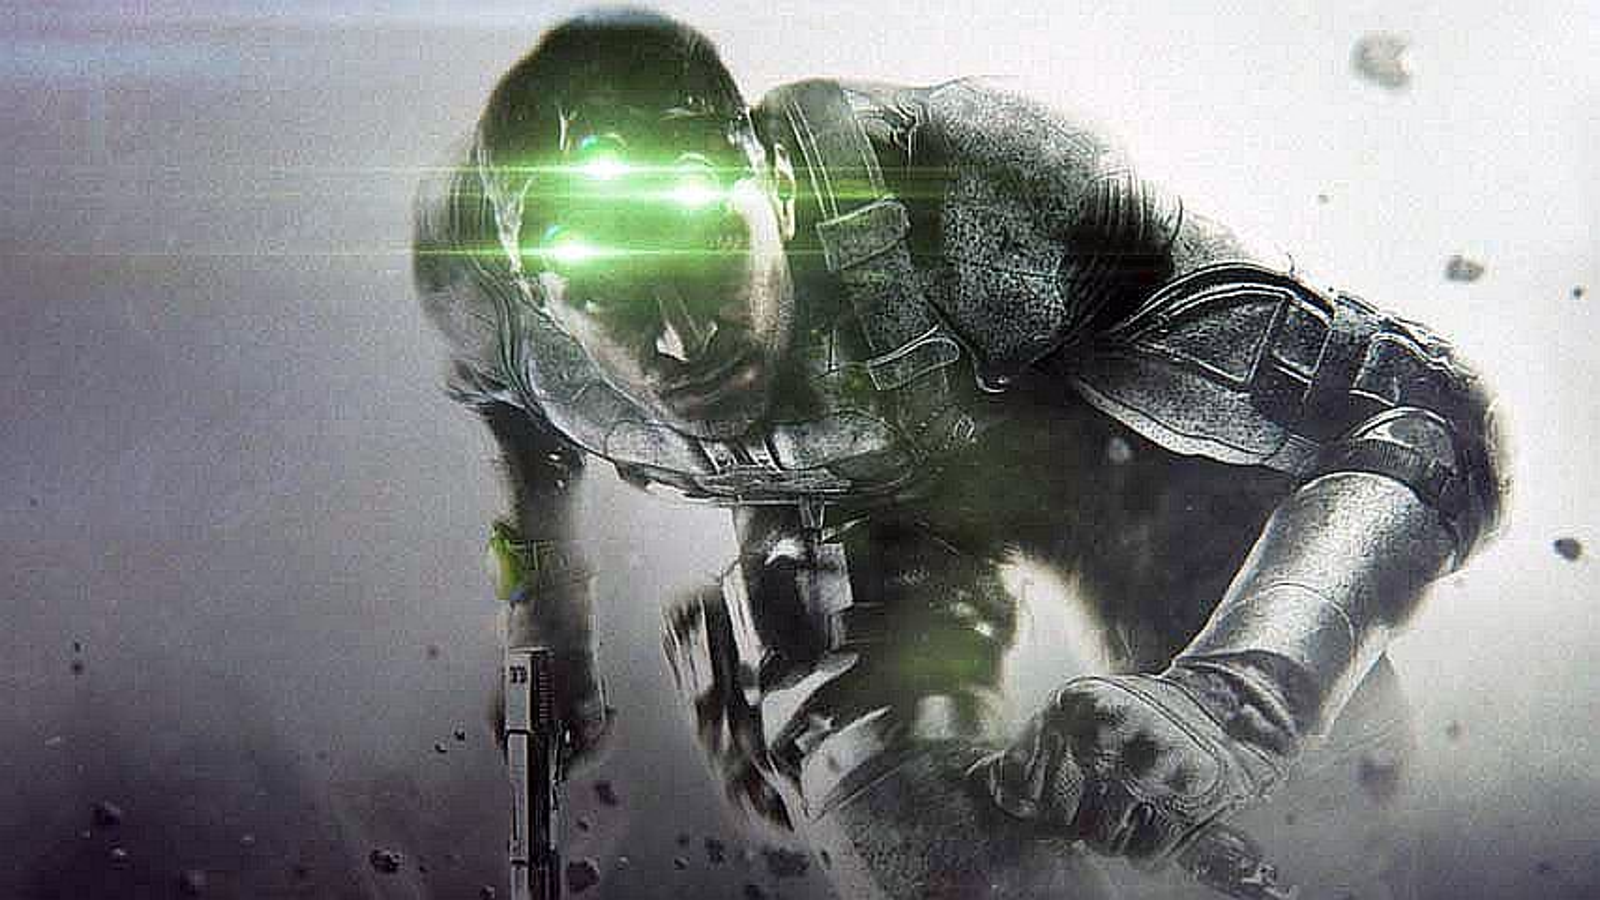 Splinter Cell reboot possibly in development, following trademark filing